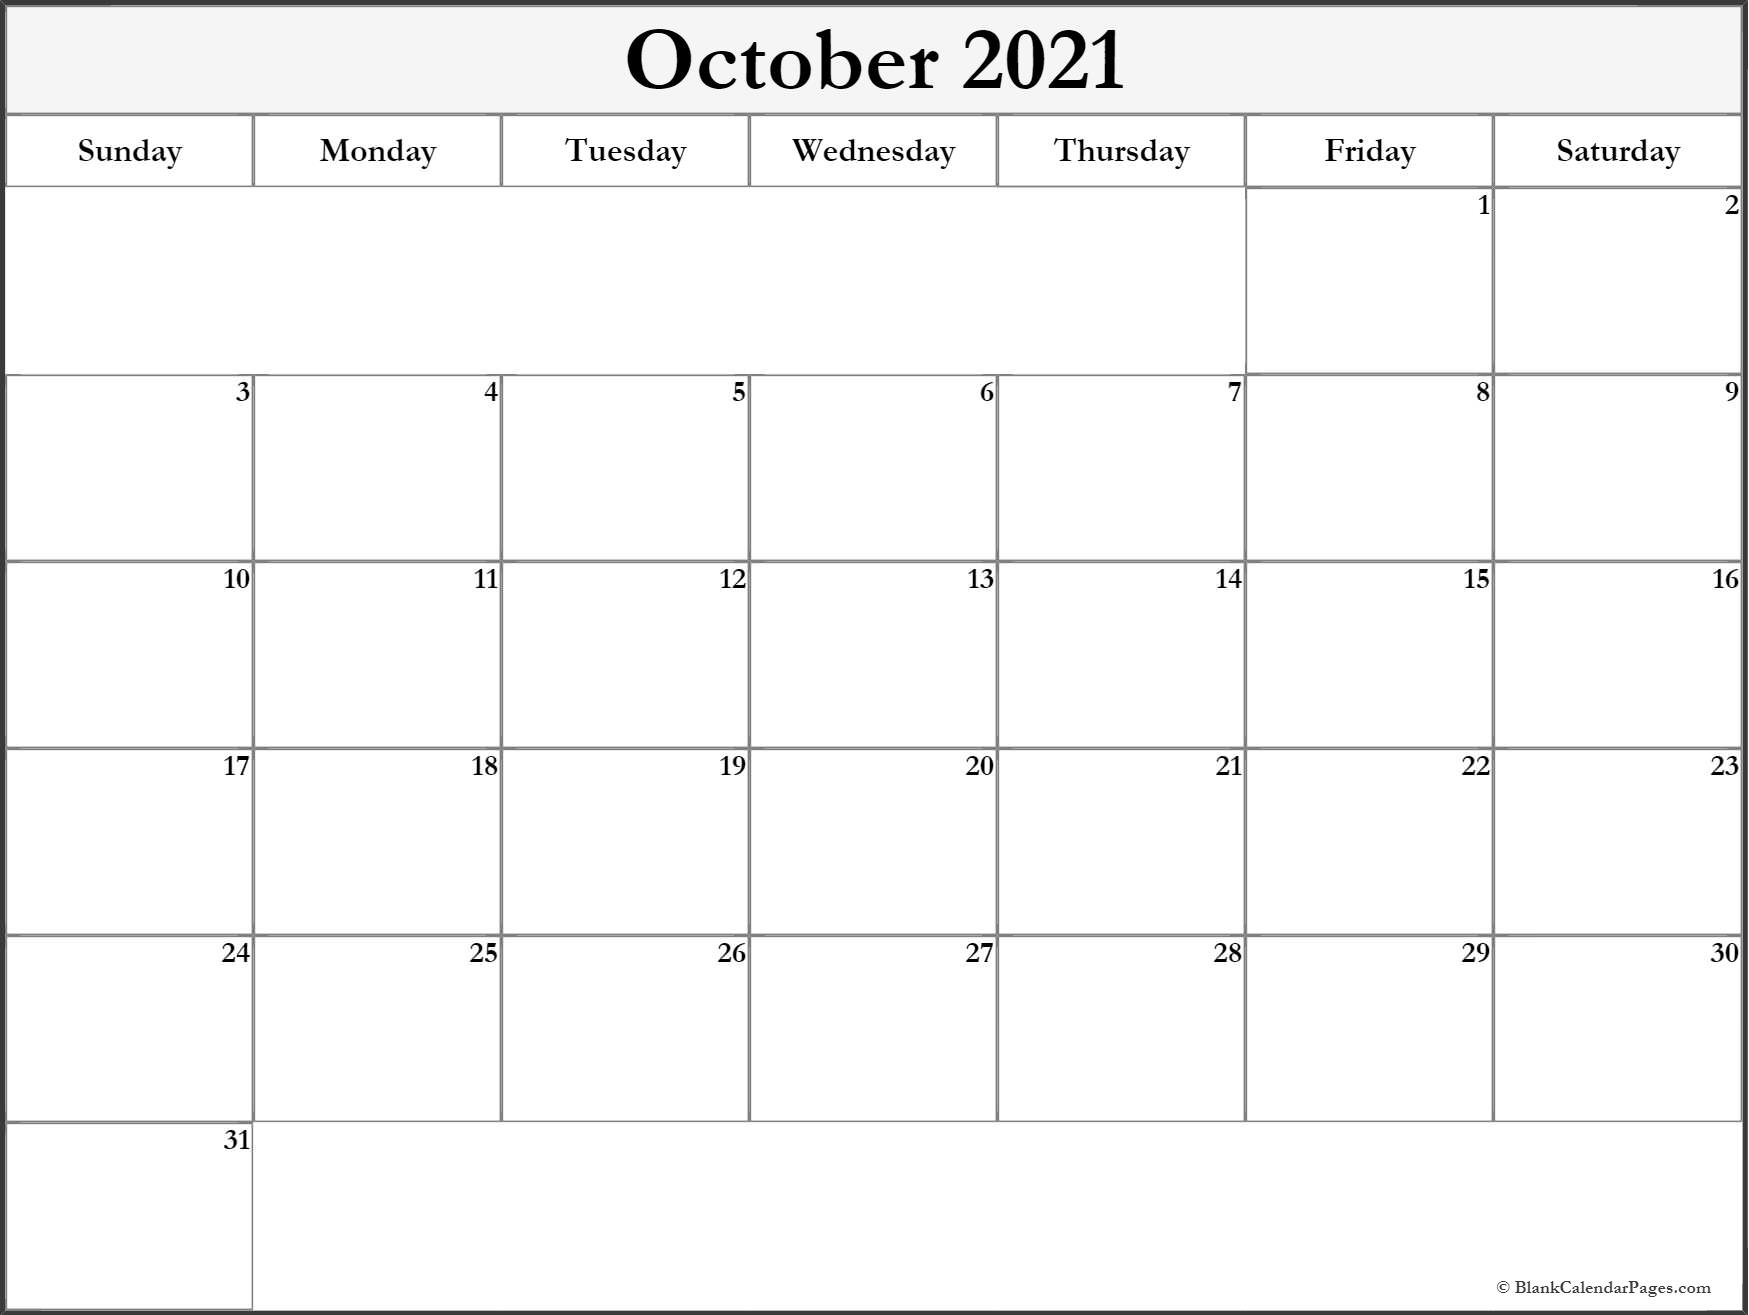 October 2021 Blank Calendar Templates.